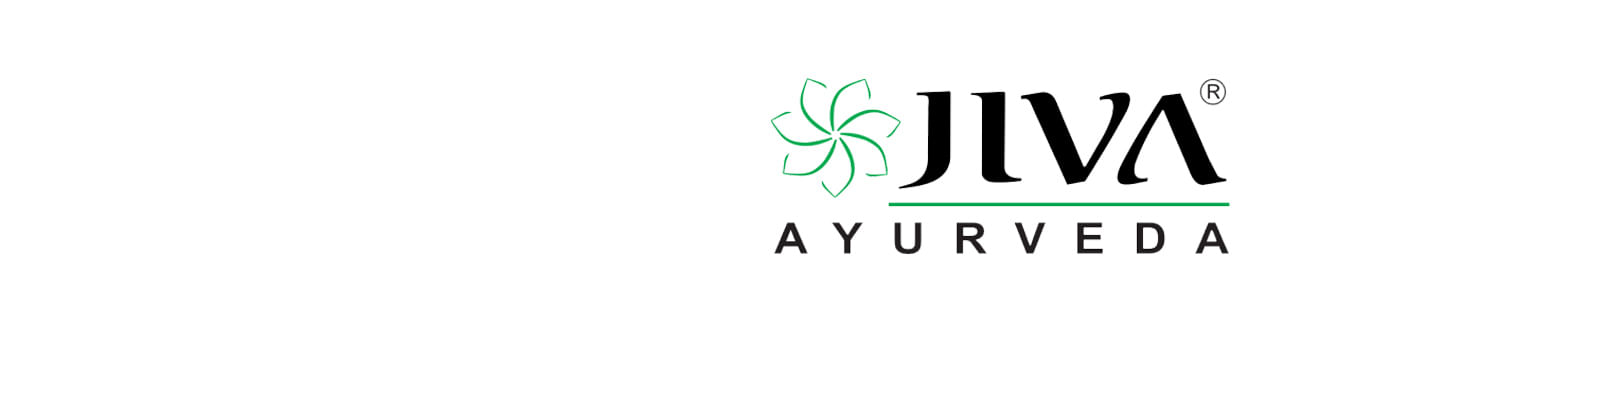 Jiva Ayurveda - Jalandhar